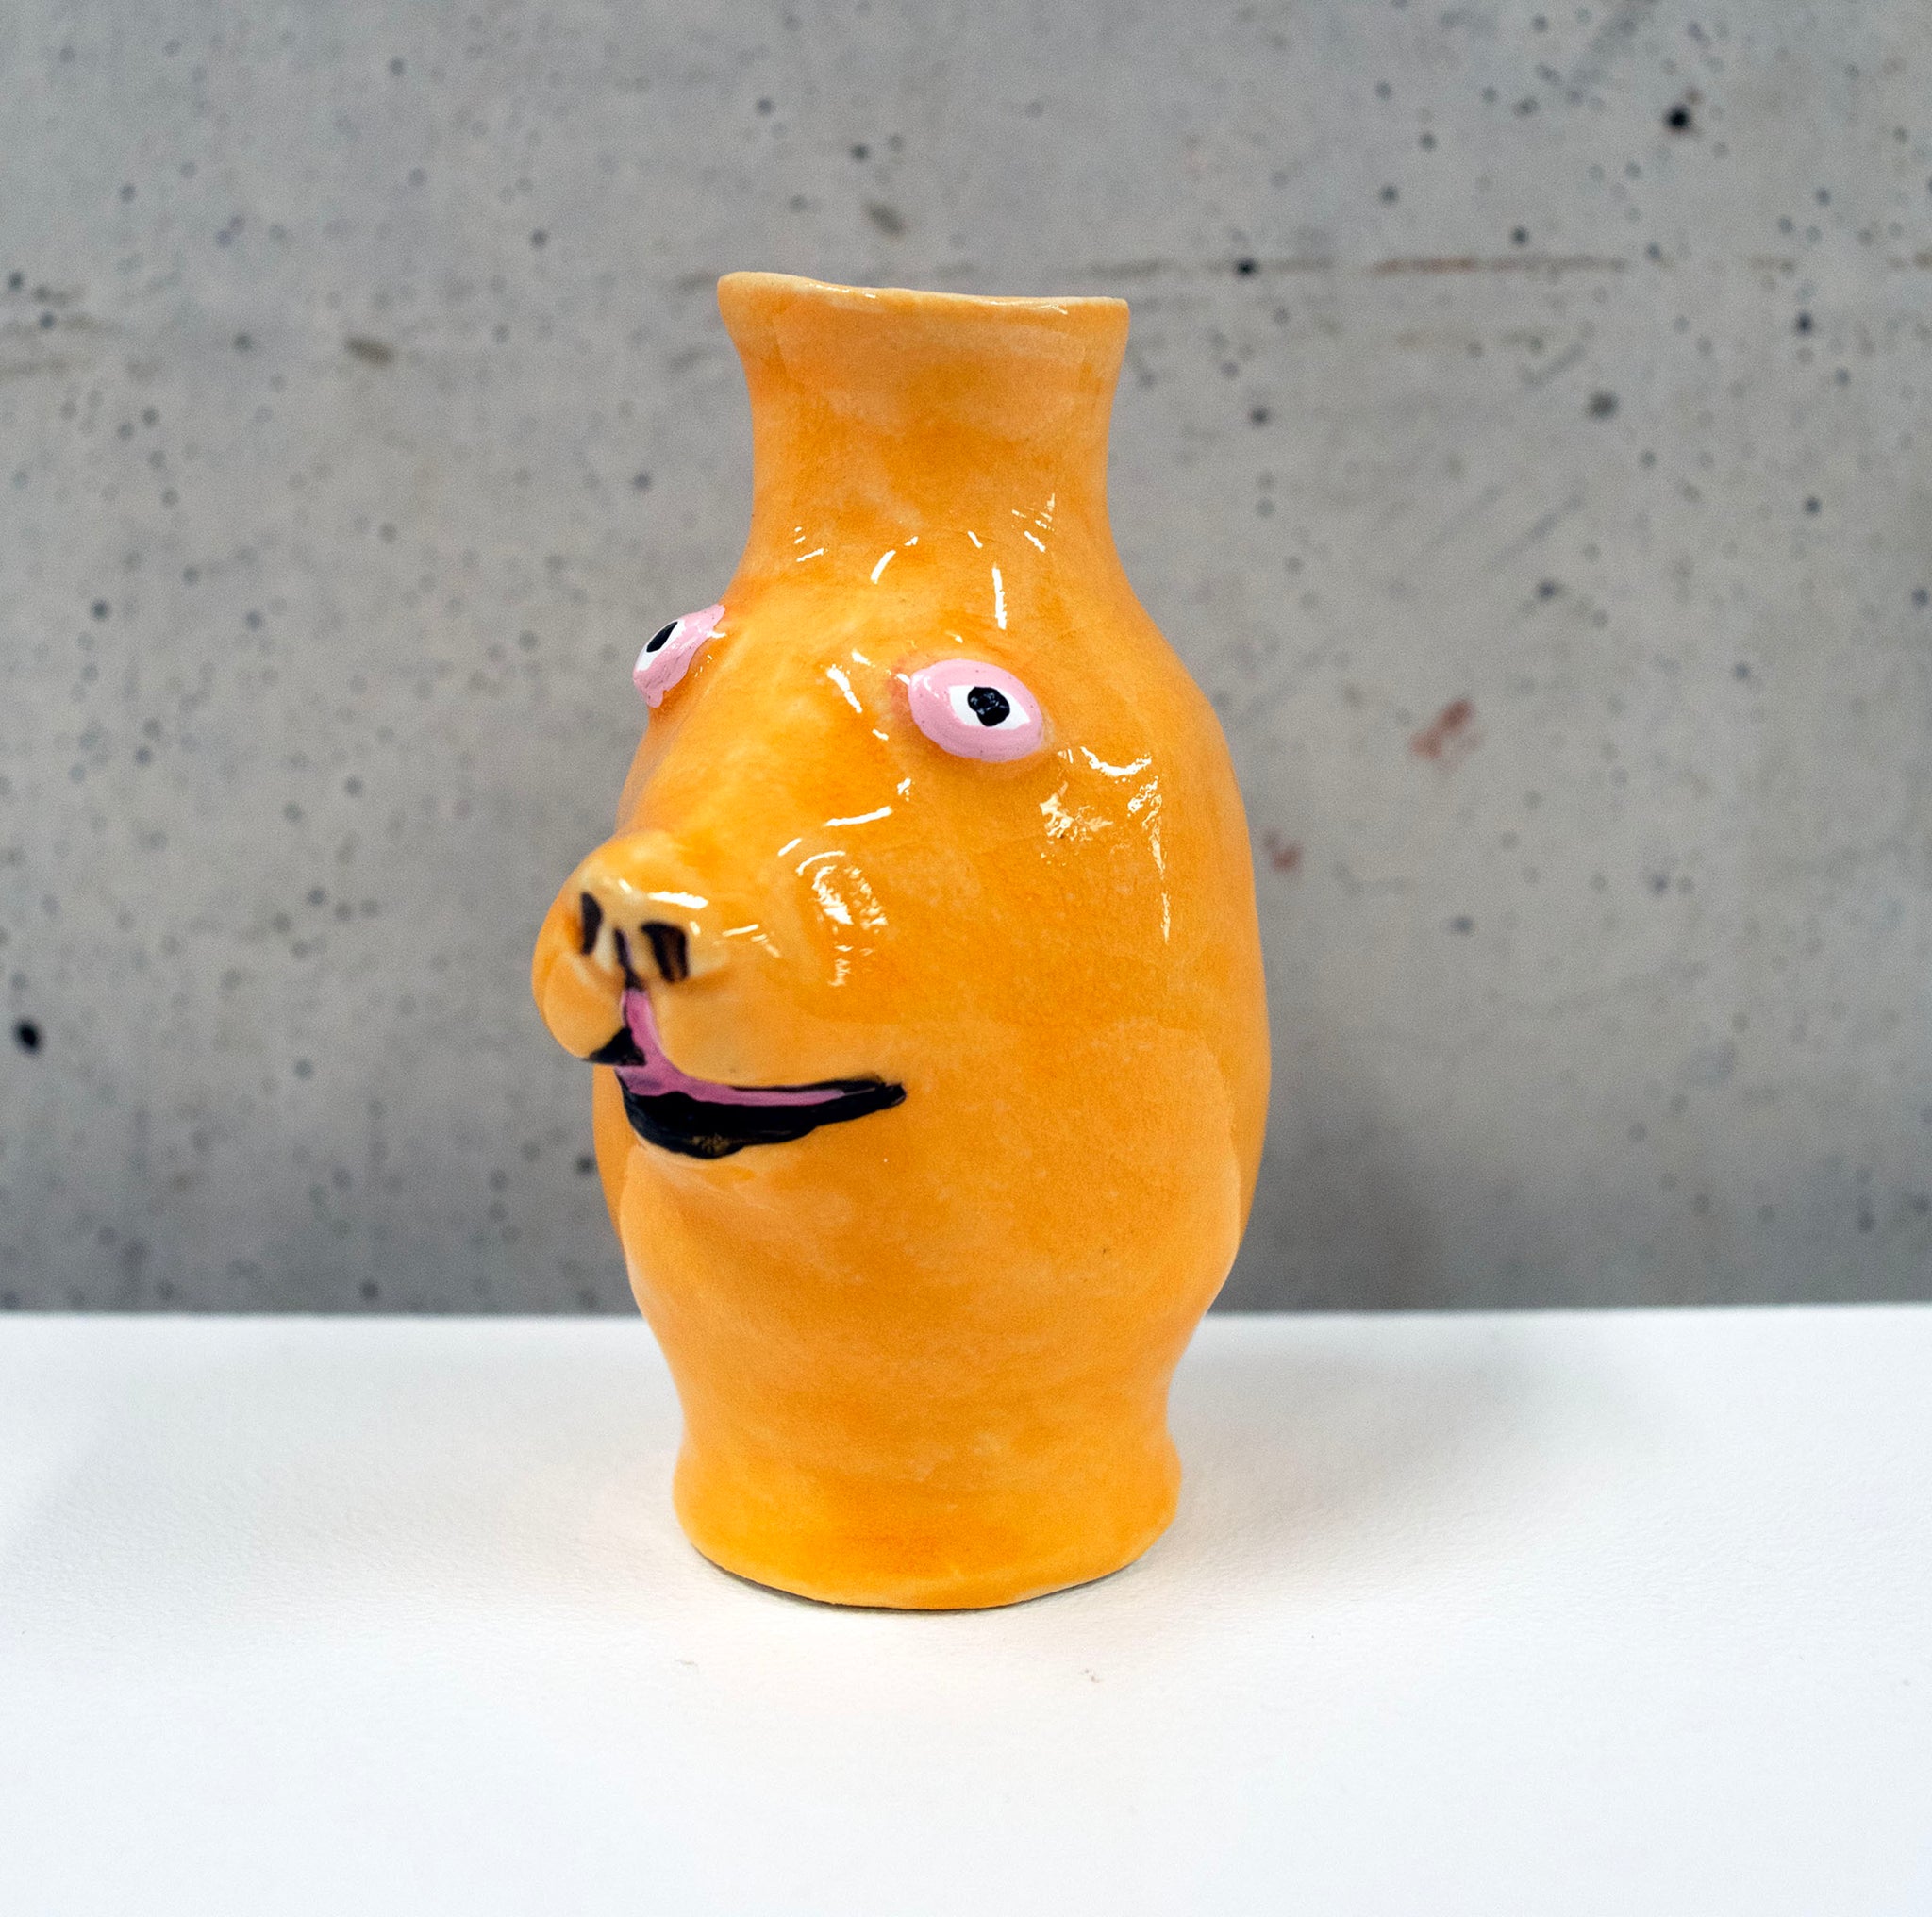 Lauren Cohen, "Dog Vase 5" SOLD